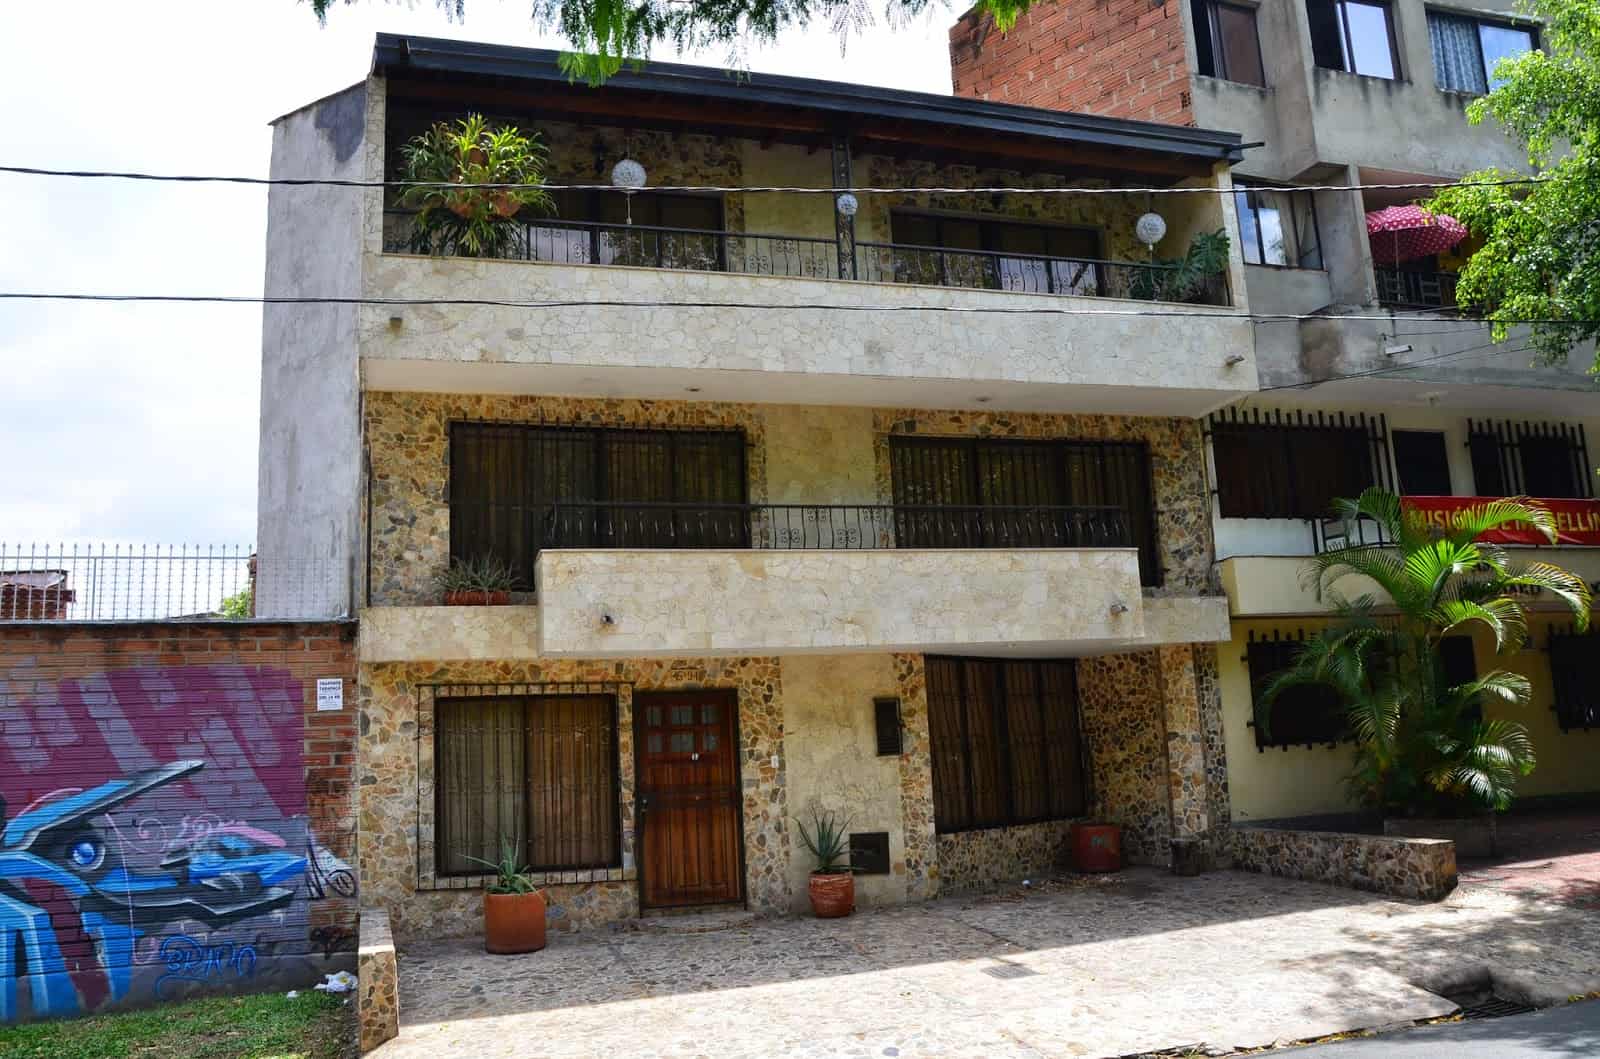 The home where Escobar was hiding on the Pablo Escobar tour in Medellín, Colombia